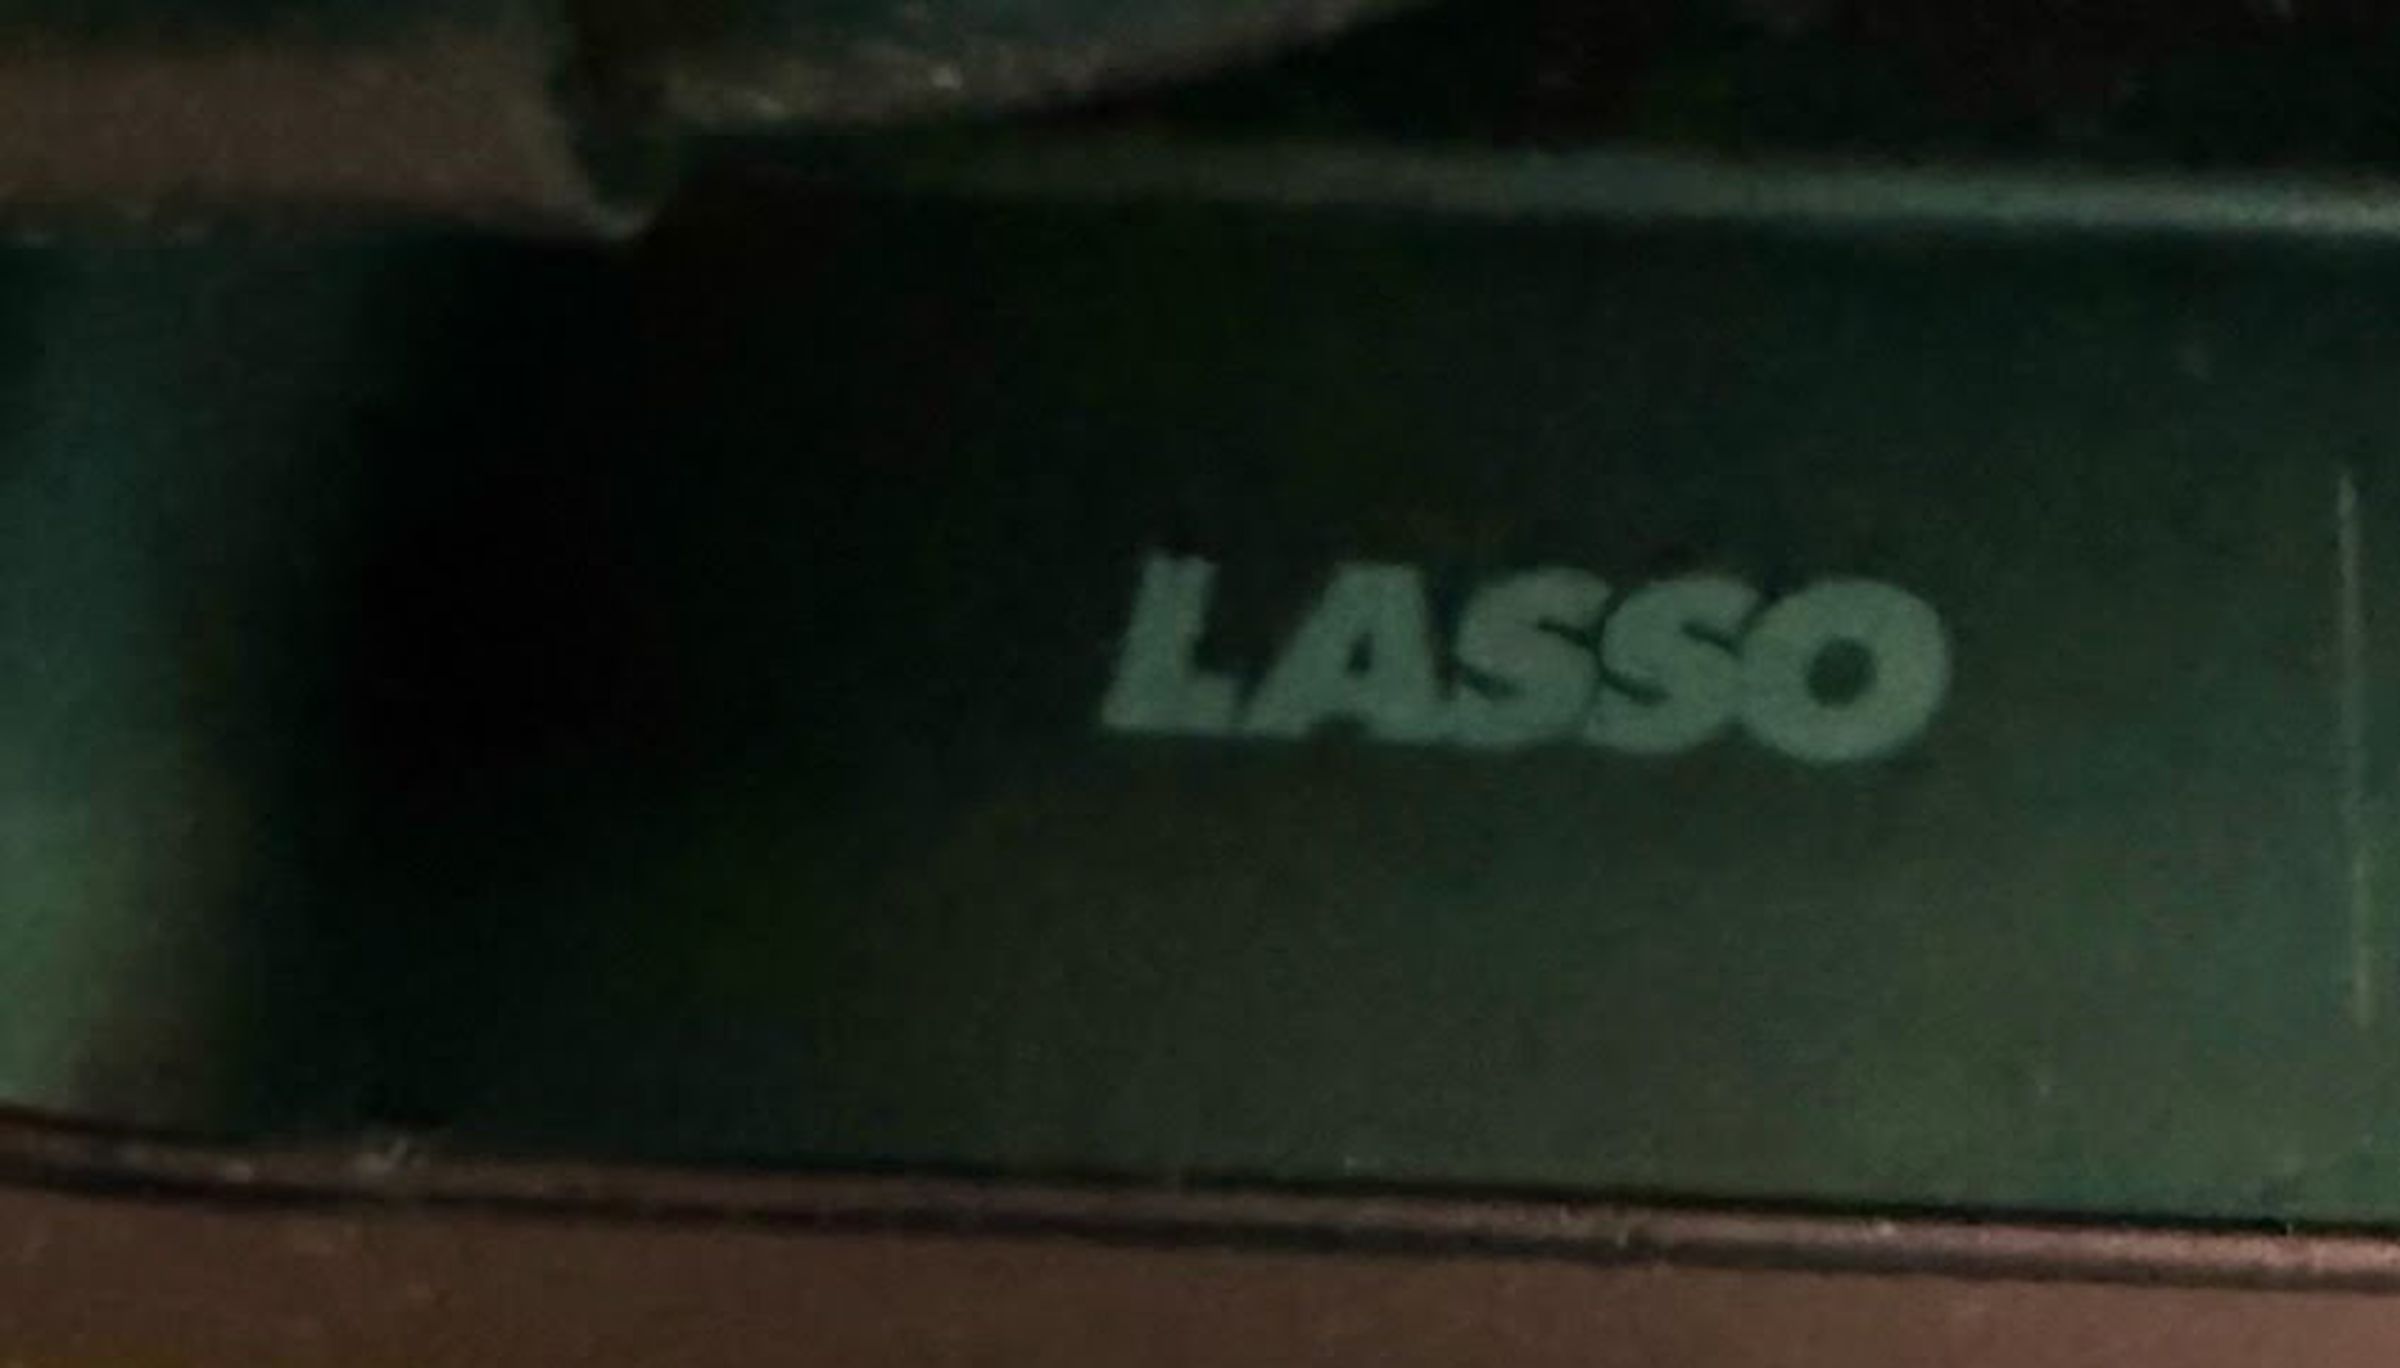 An image showing the Lasso codename on Sonos’ next soundbar.